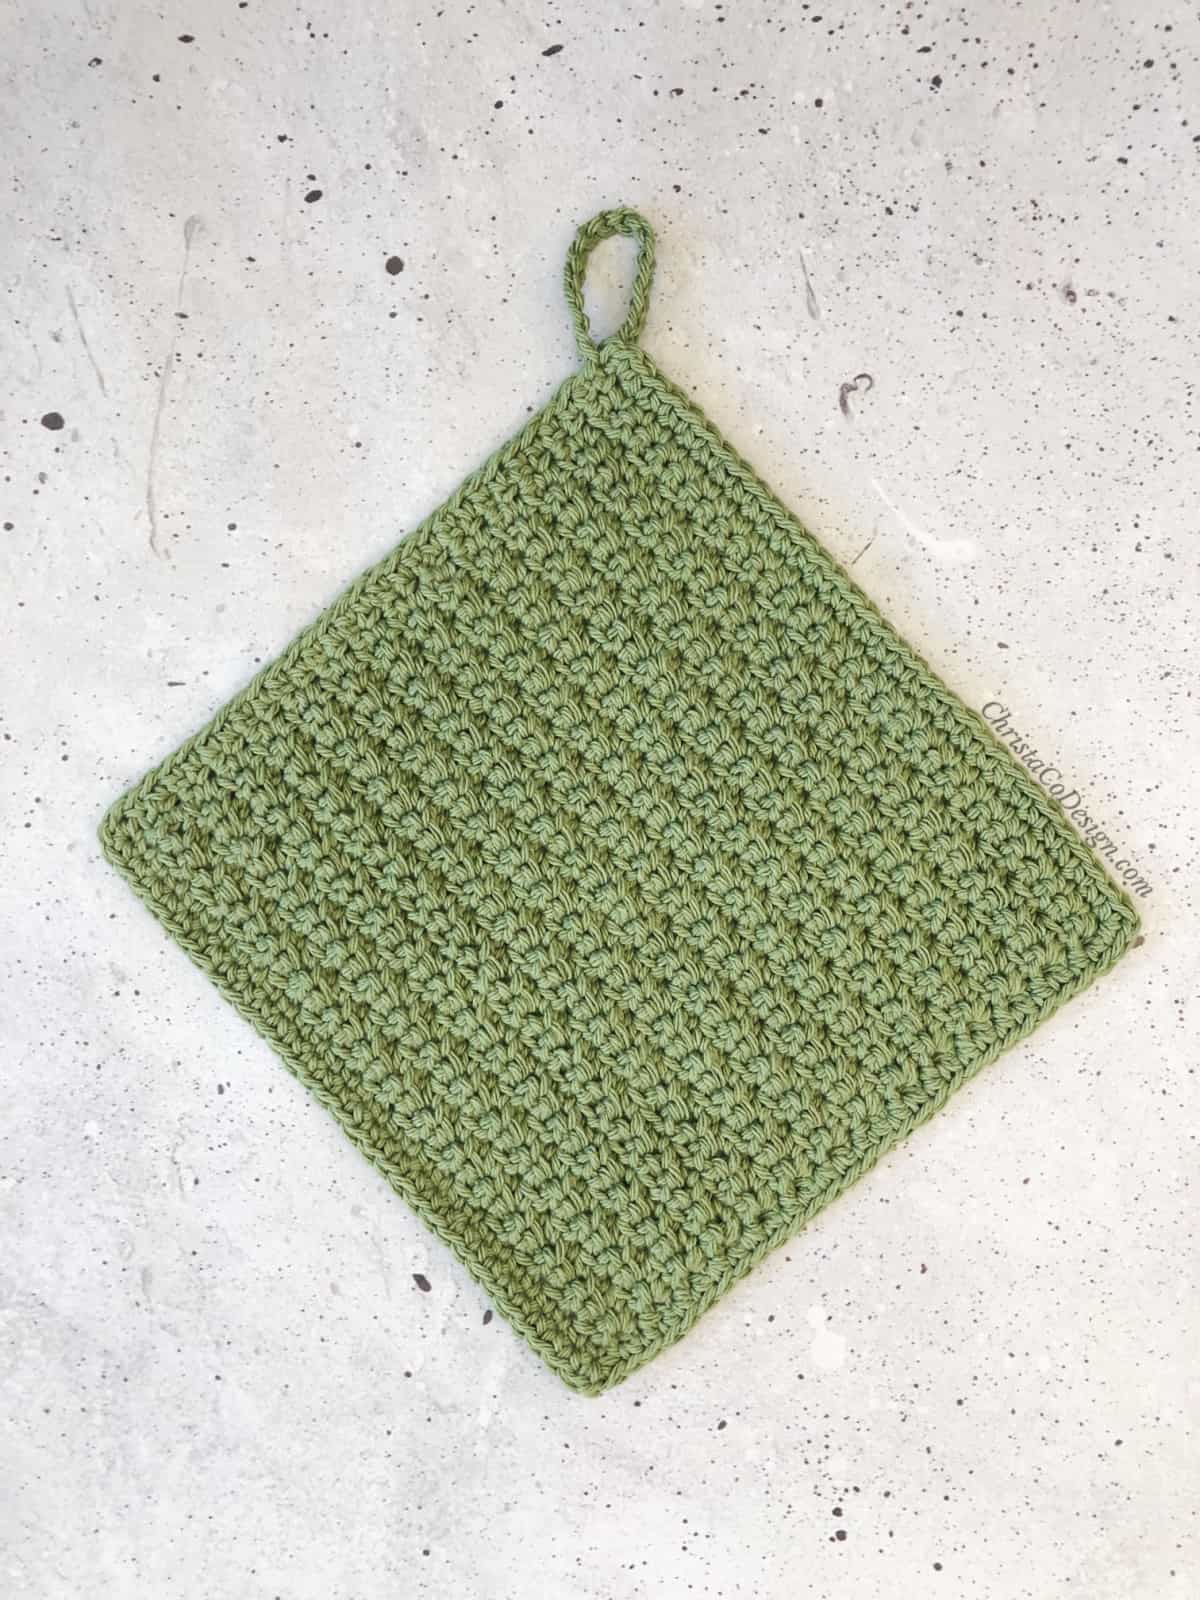 Crochet dishcloth in green with loop.